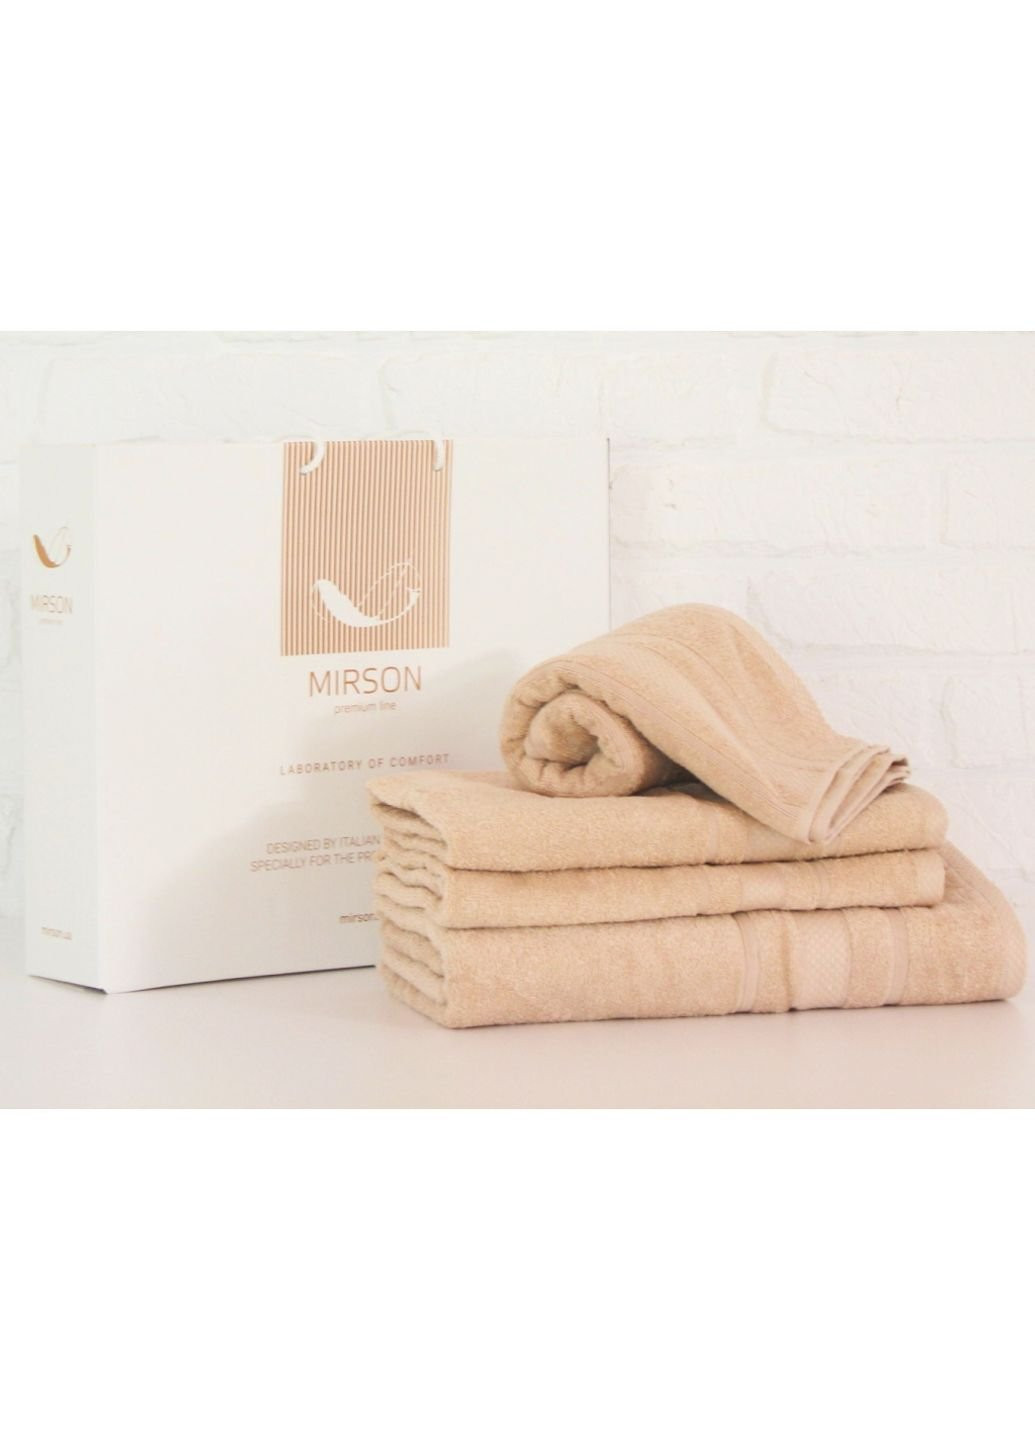 No Brand полотенце mirson набор банных №5084 elite softness beige 40х70, 50х90, 70х140 (2200003183542) бежевый производство - Украина